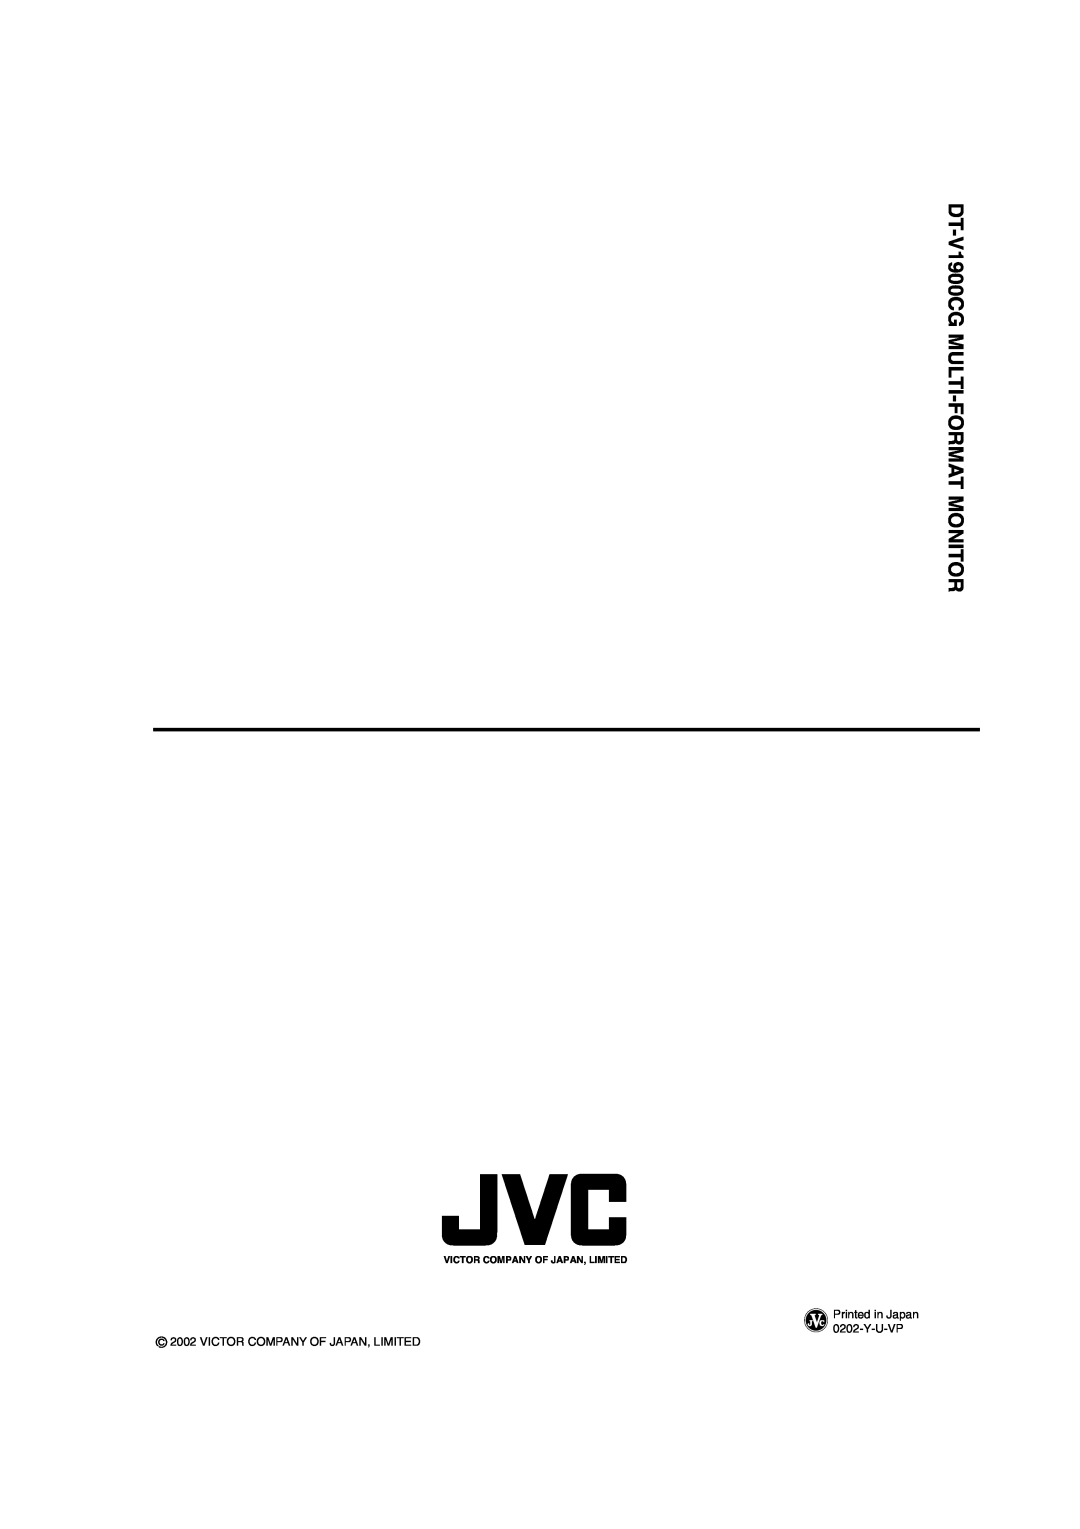 JVC manual DT-V1900CG MULTI -FORMAT MONITOR, Printed in Japan 0202-Y-U-VP 2002 VICTOR COMPANY OF JAPAN, LIMITED 